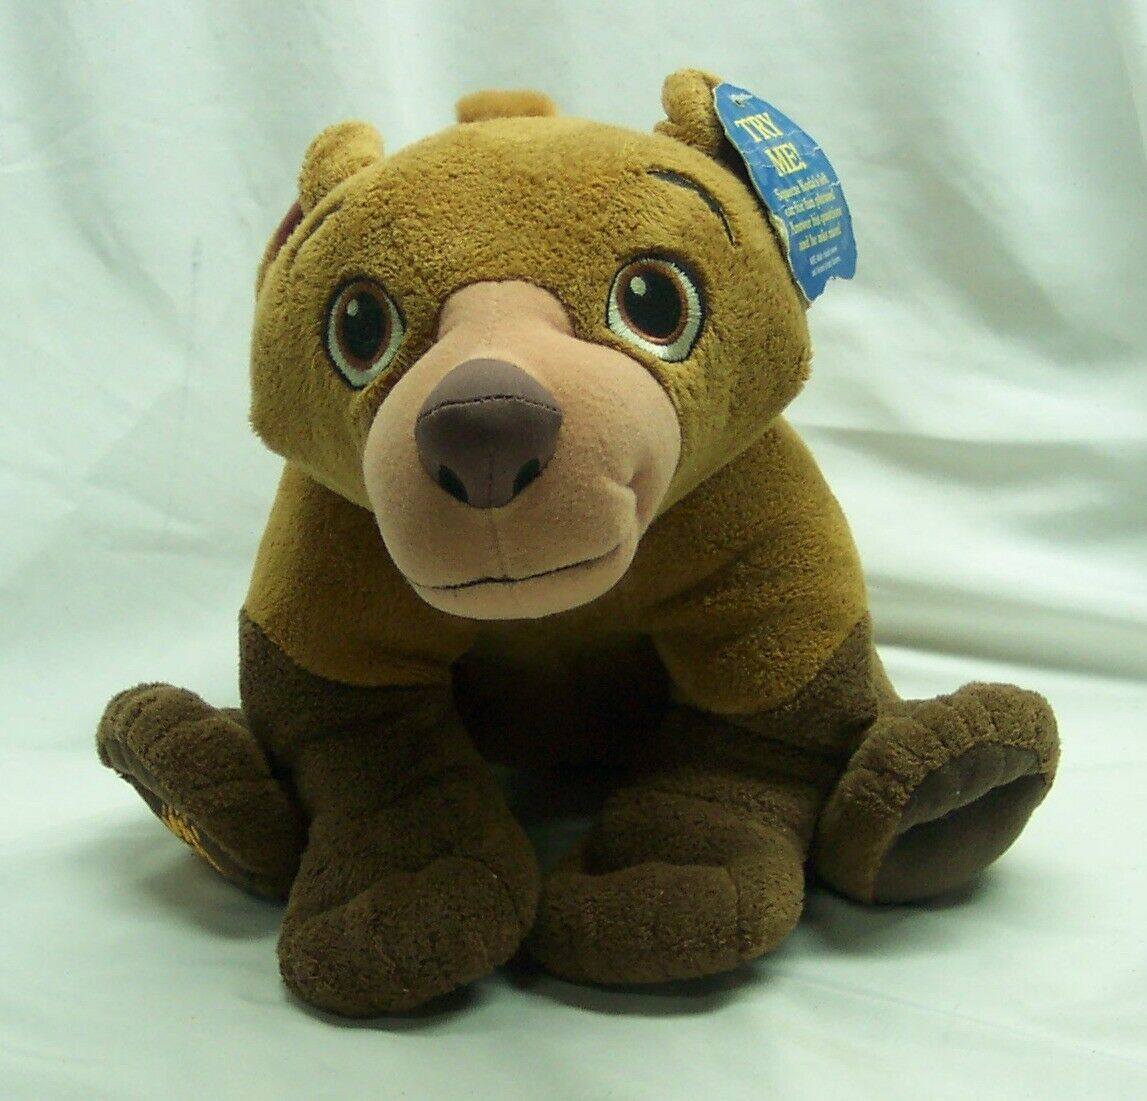 HASBRO Disney Brother Bear KODA Talking BEAR W/ SOUND 9" Plush Stuffed Animal - $29.70